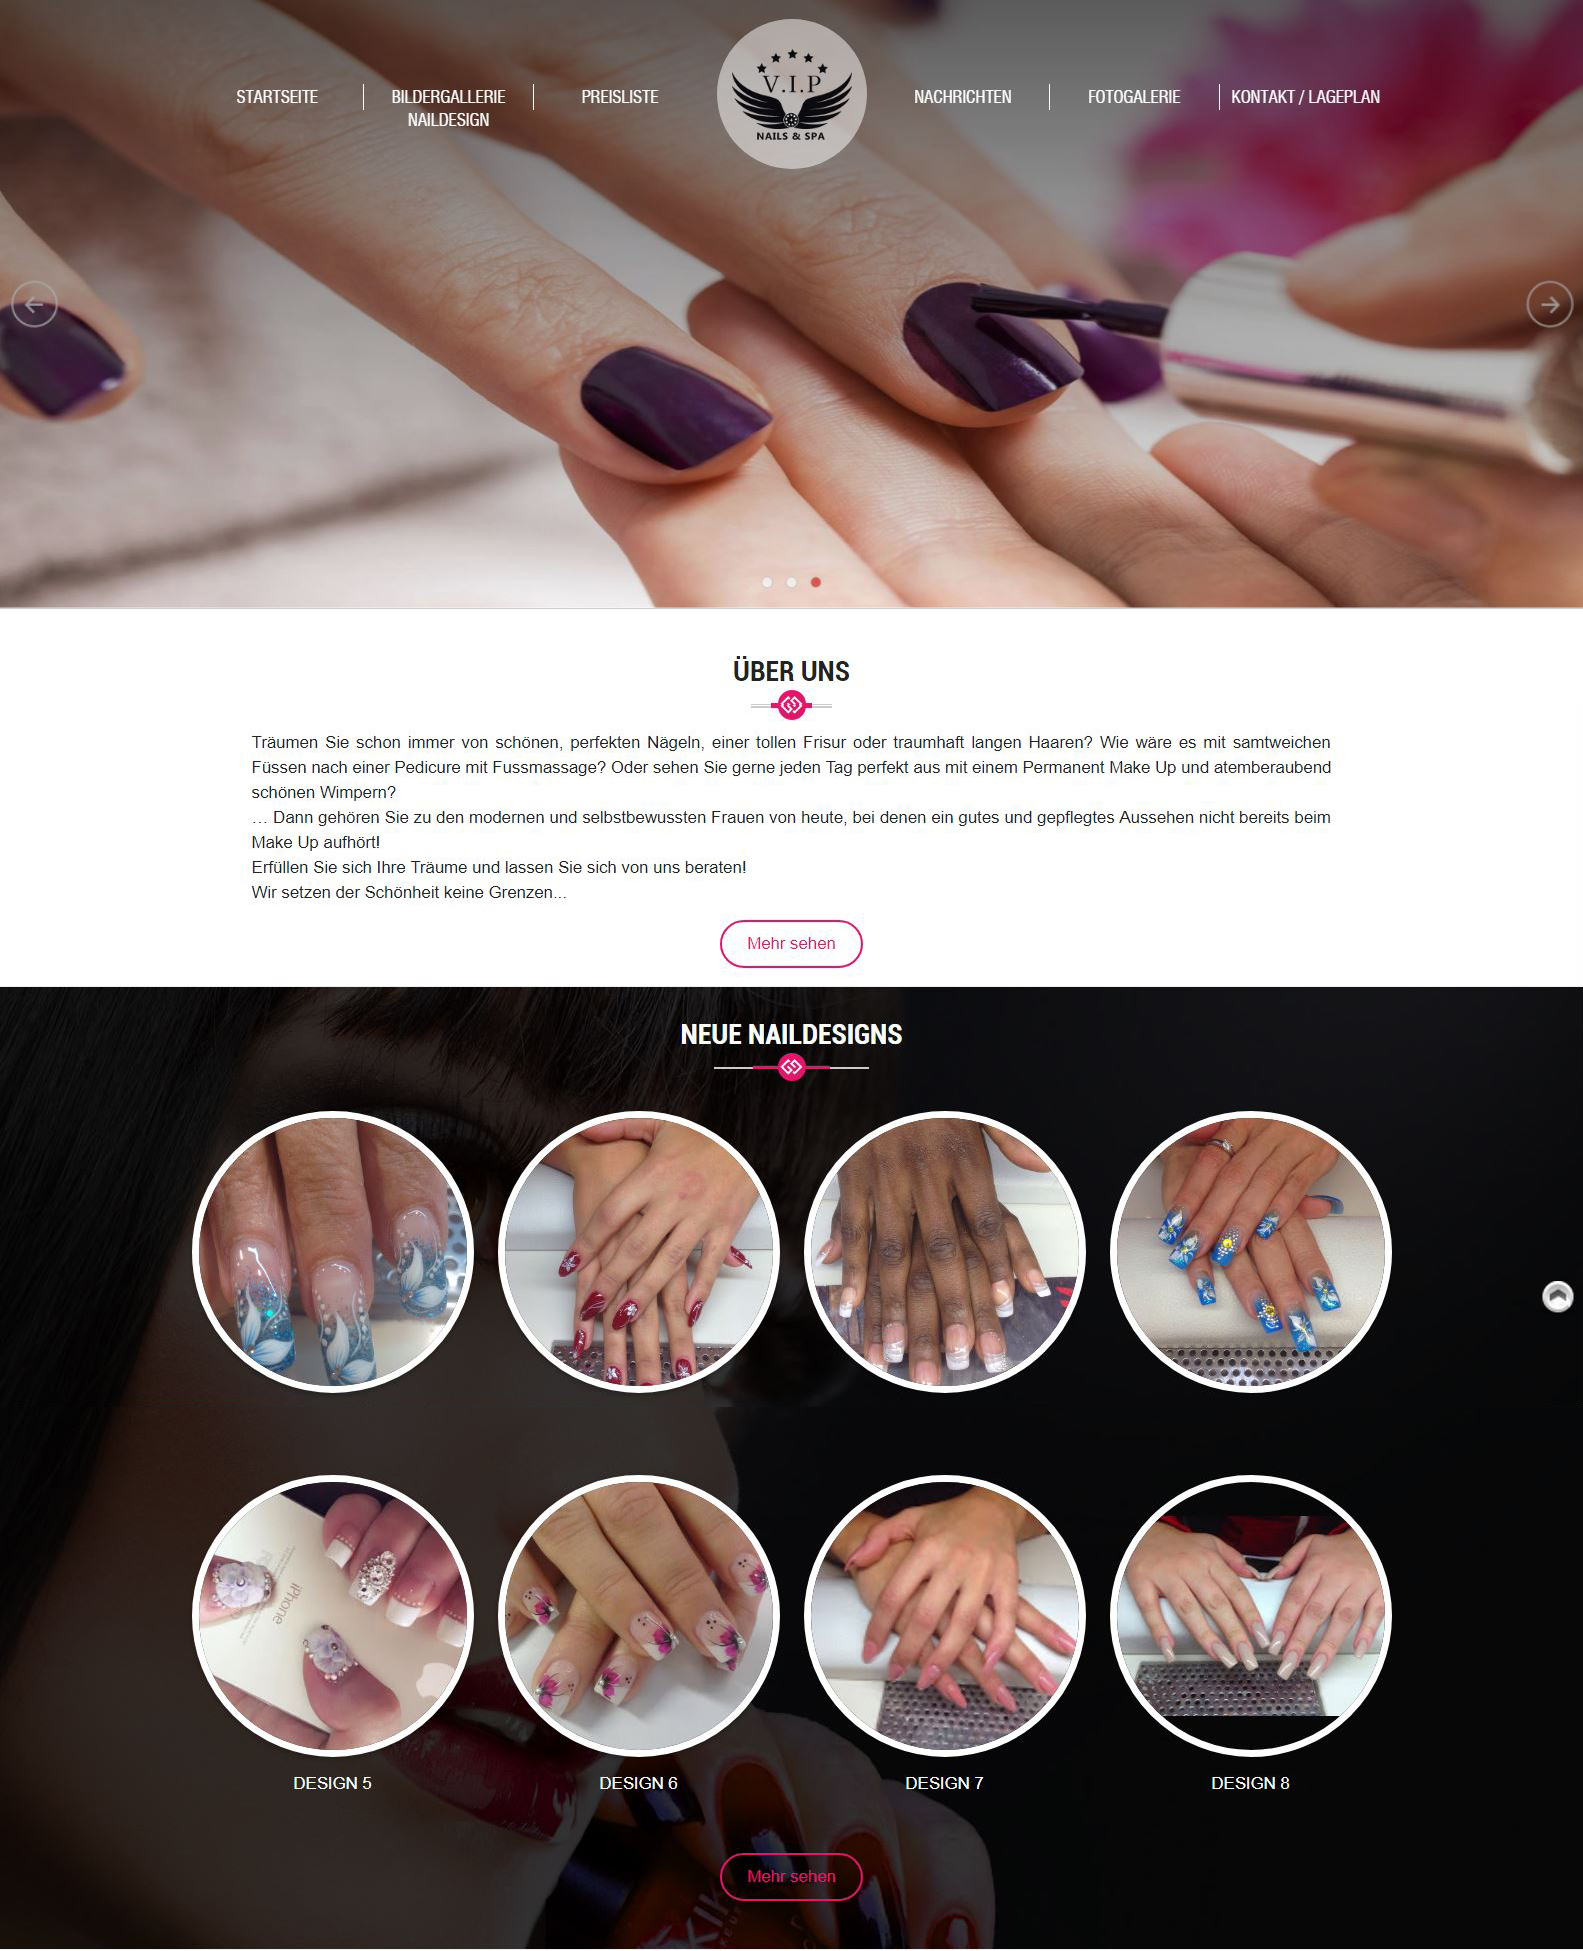 Thiết kế website Vip Nails